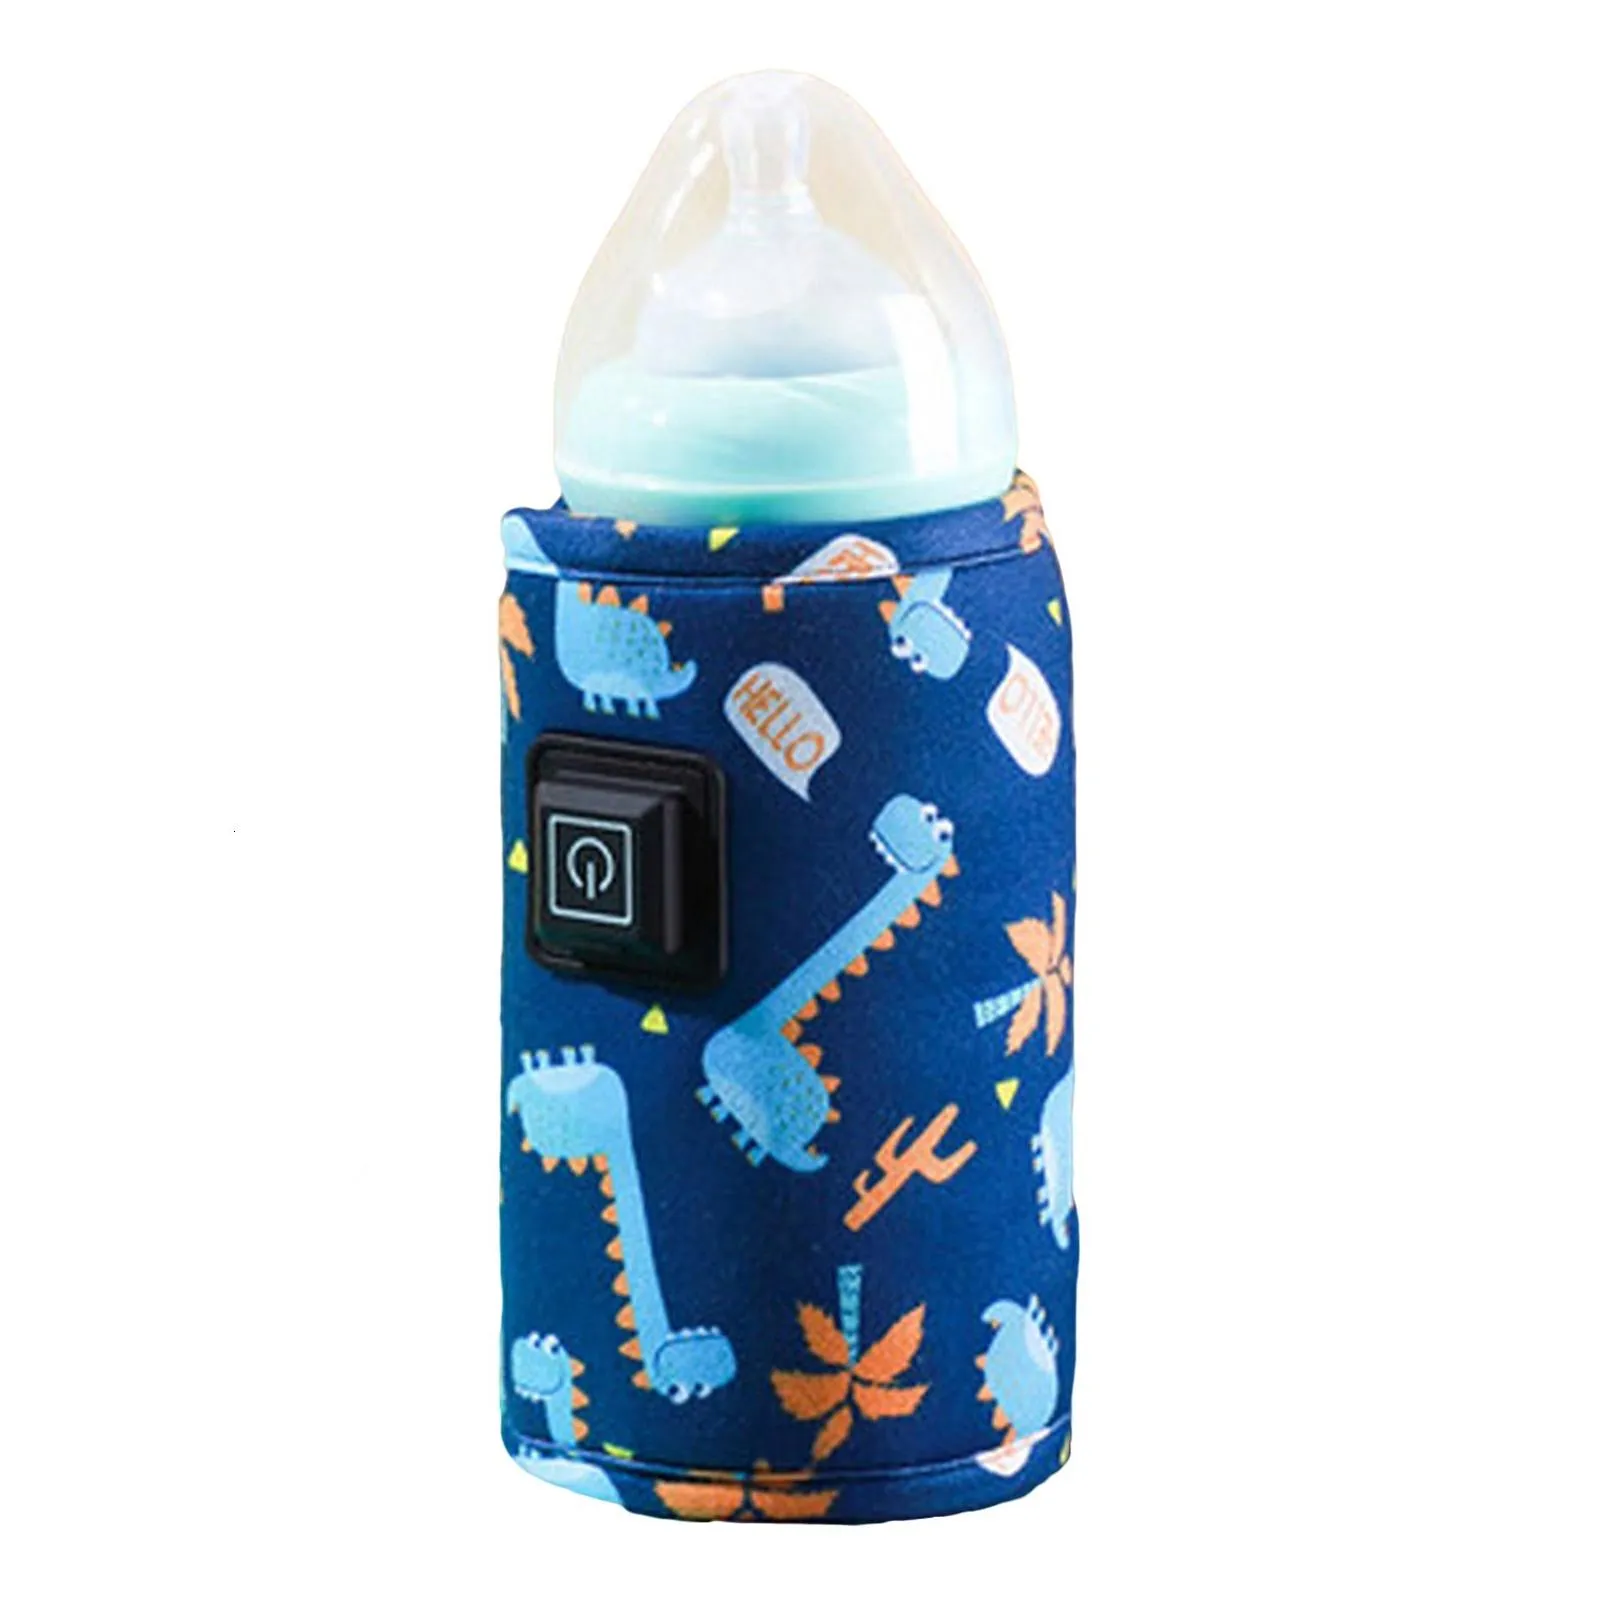 Bottle Warmers&Sterilizers# Bottle Warmers Sterilizers Usb Milk Water Warmer Travel Stroller Insated Bag Baby Nursing Heater Safe Kids Dhibw